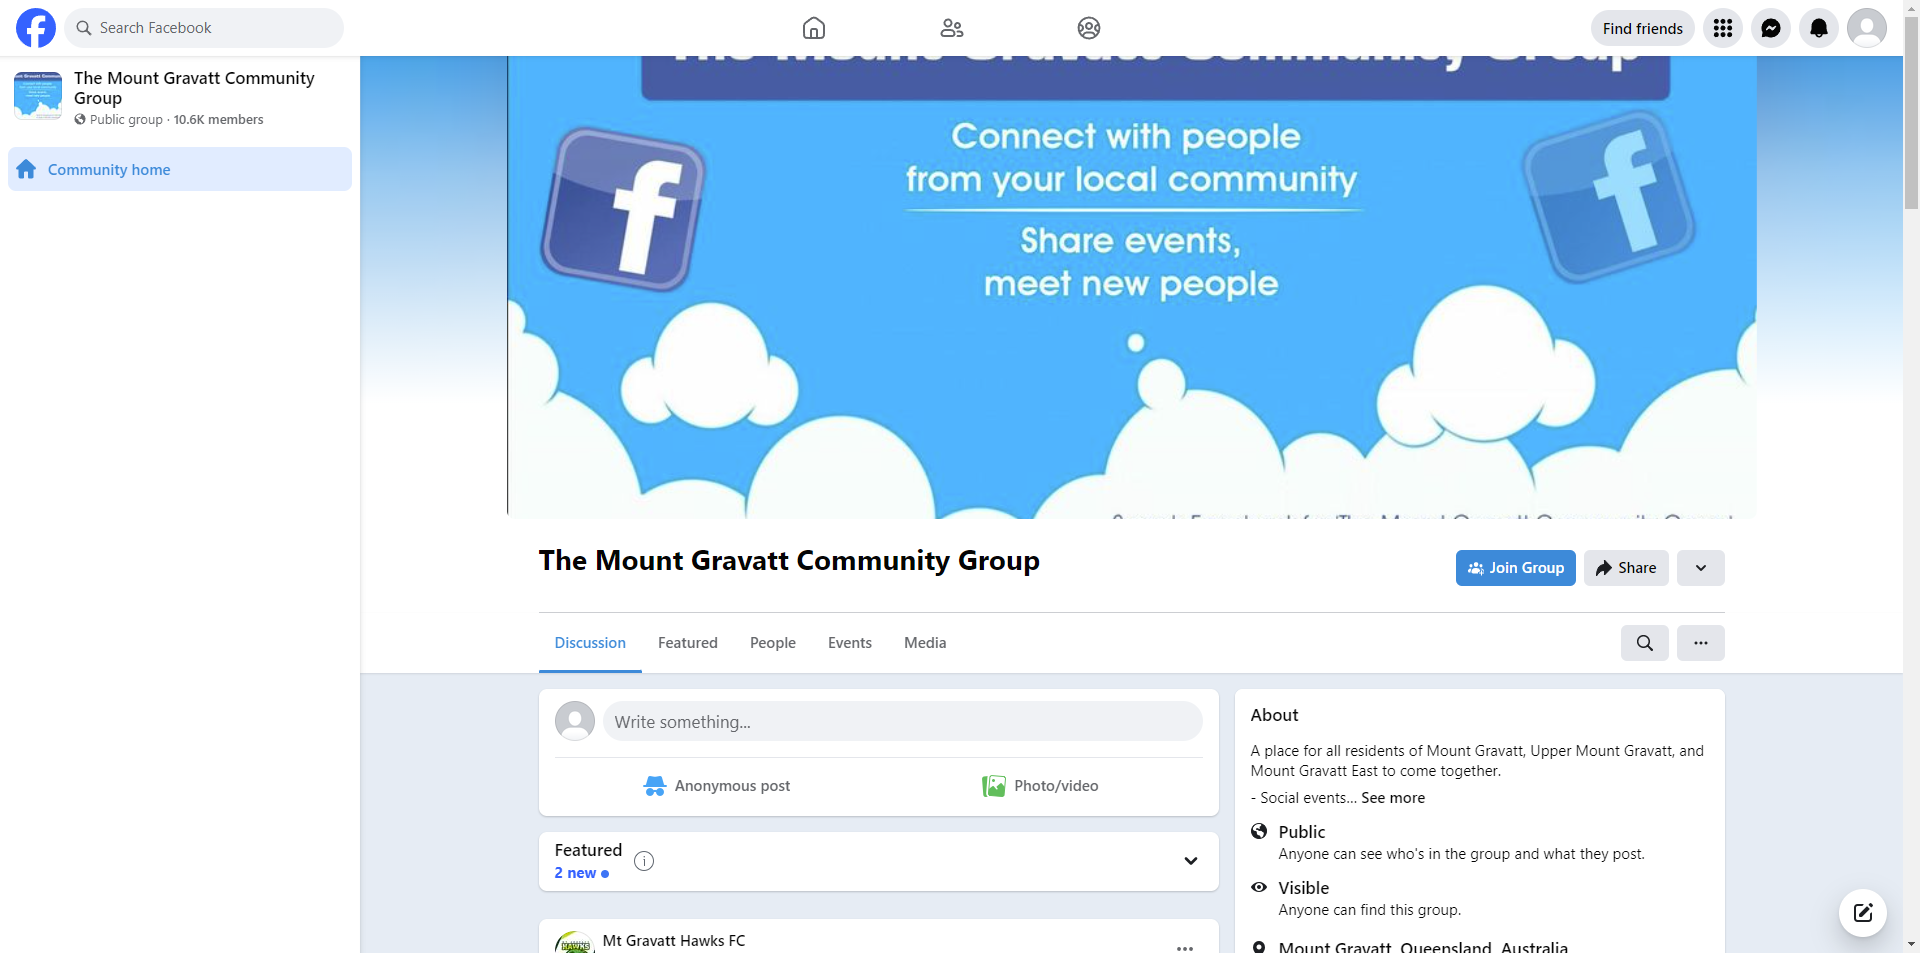 The Mount Gravatt Community Group